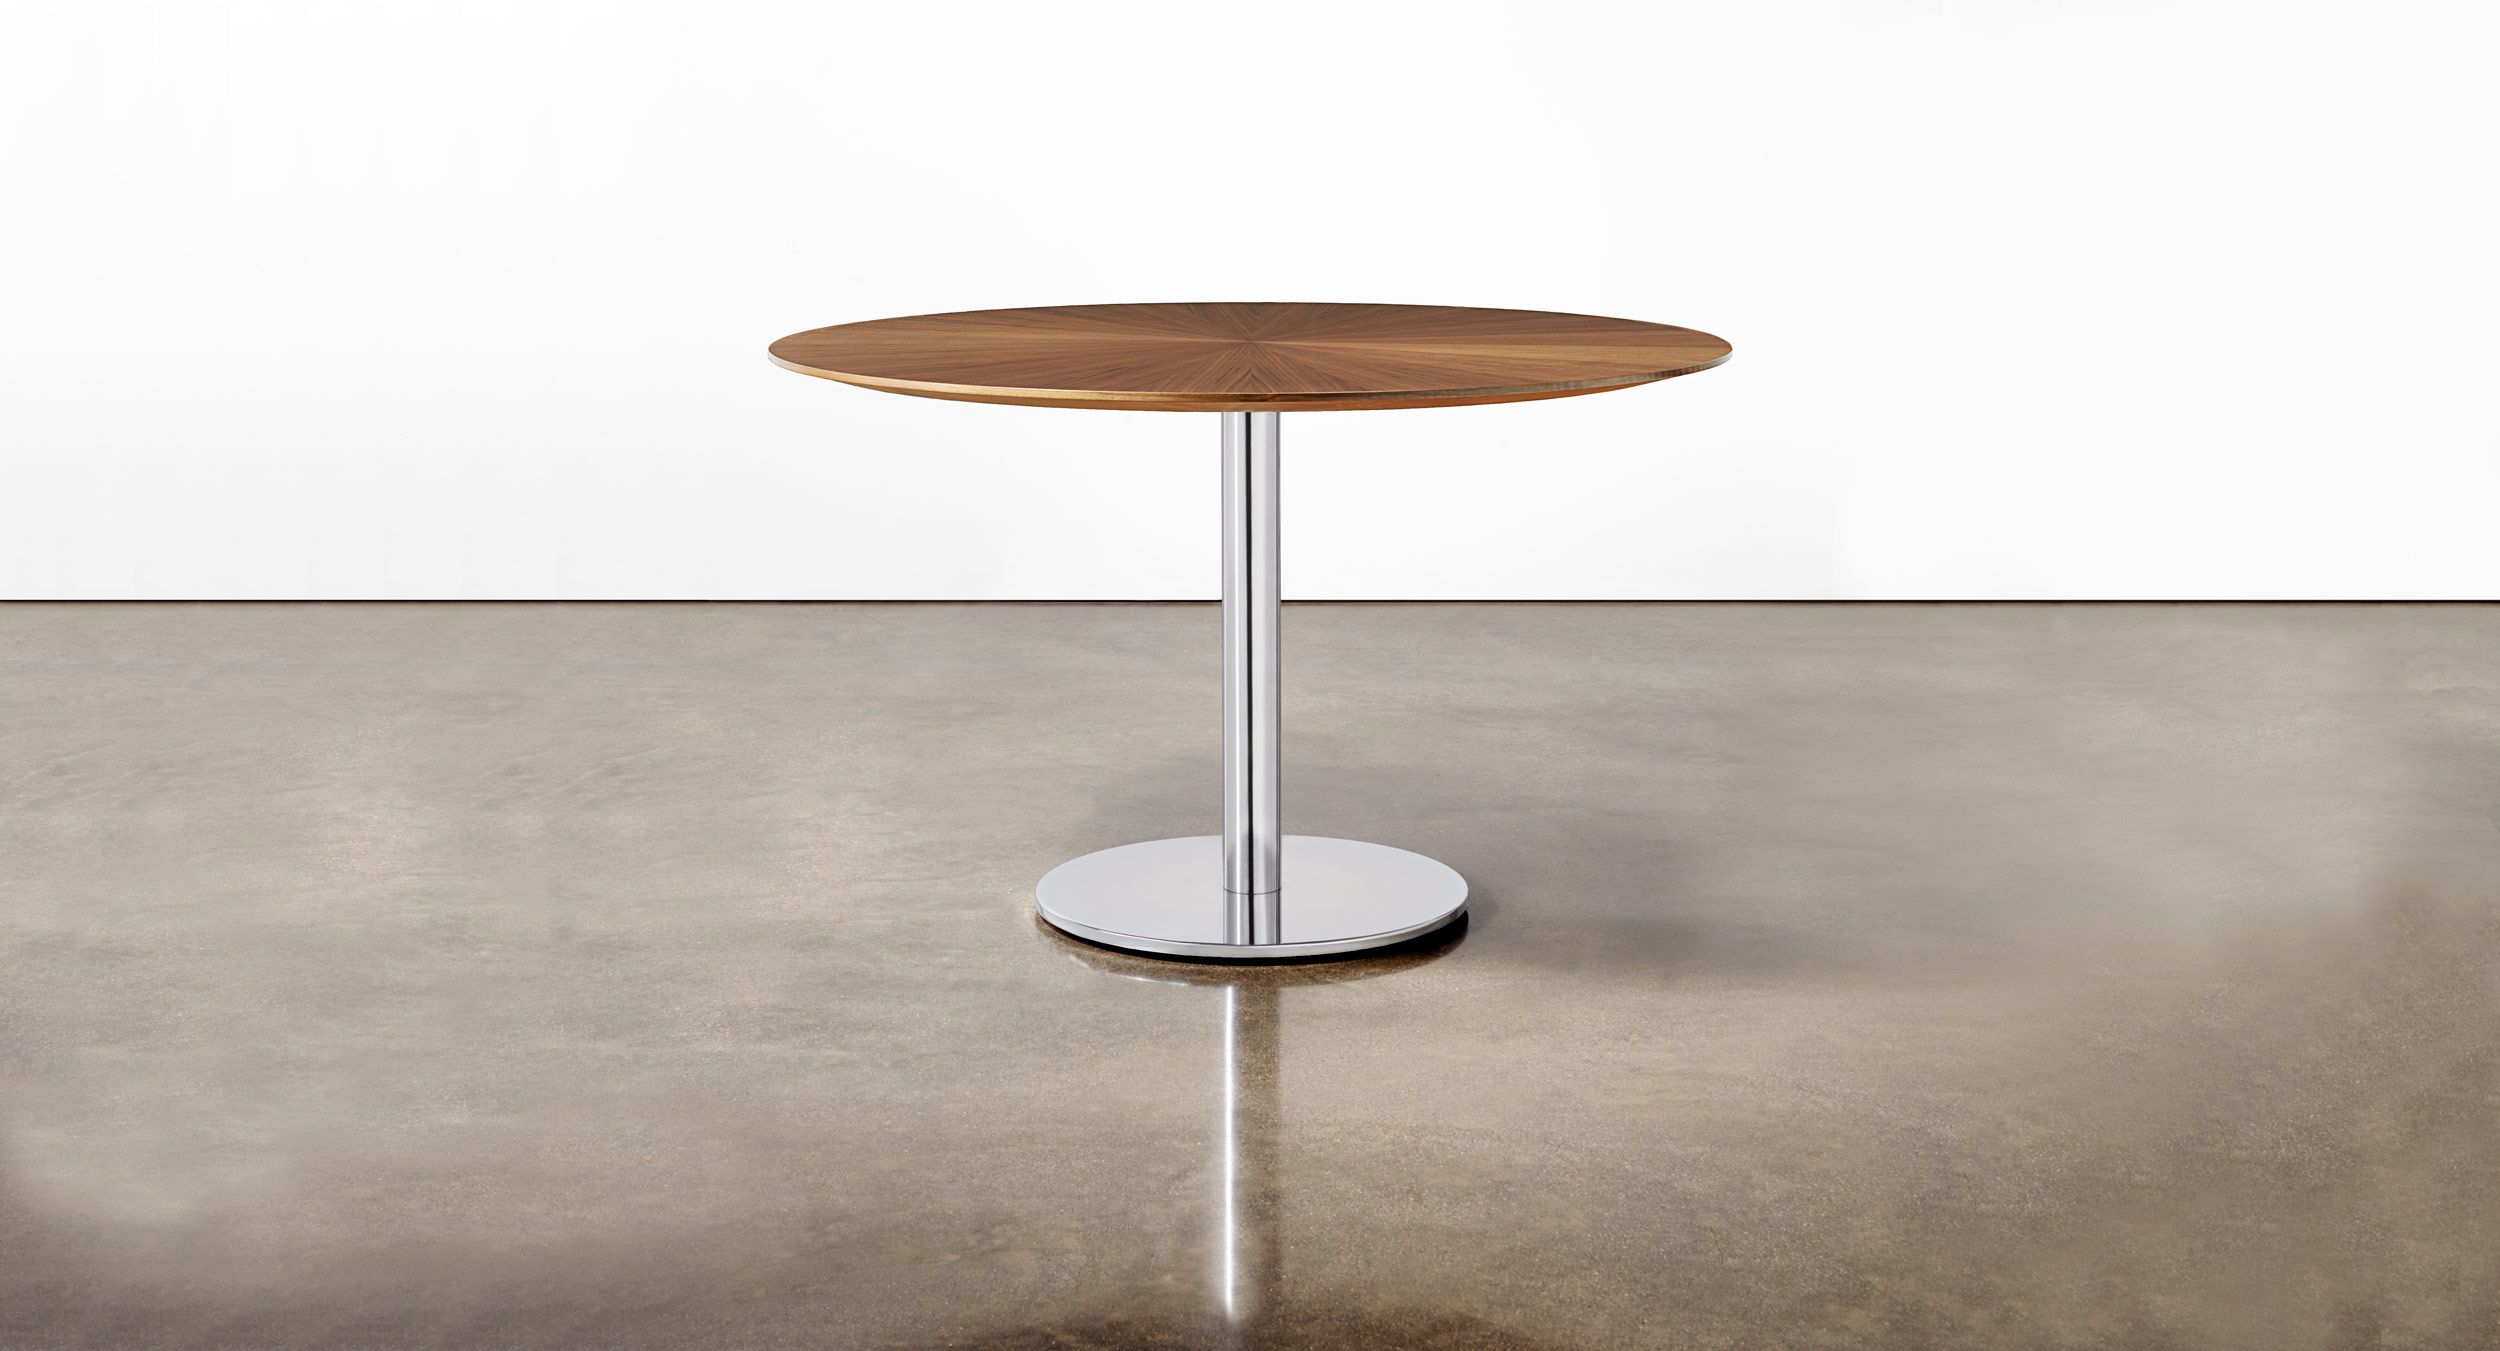 Sunburst veneer table with Disc base